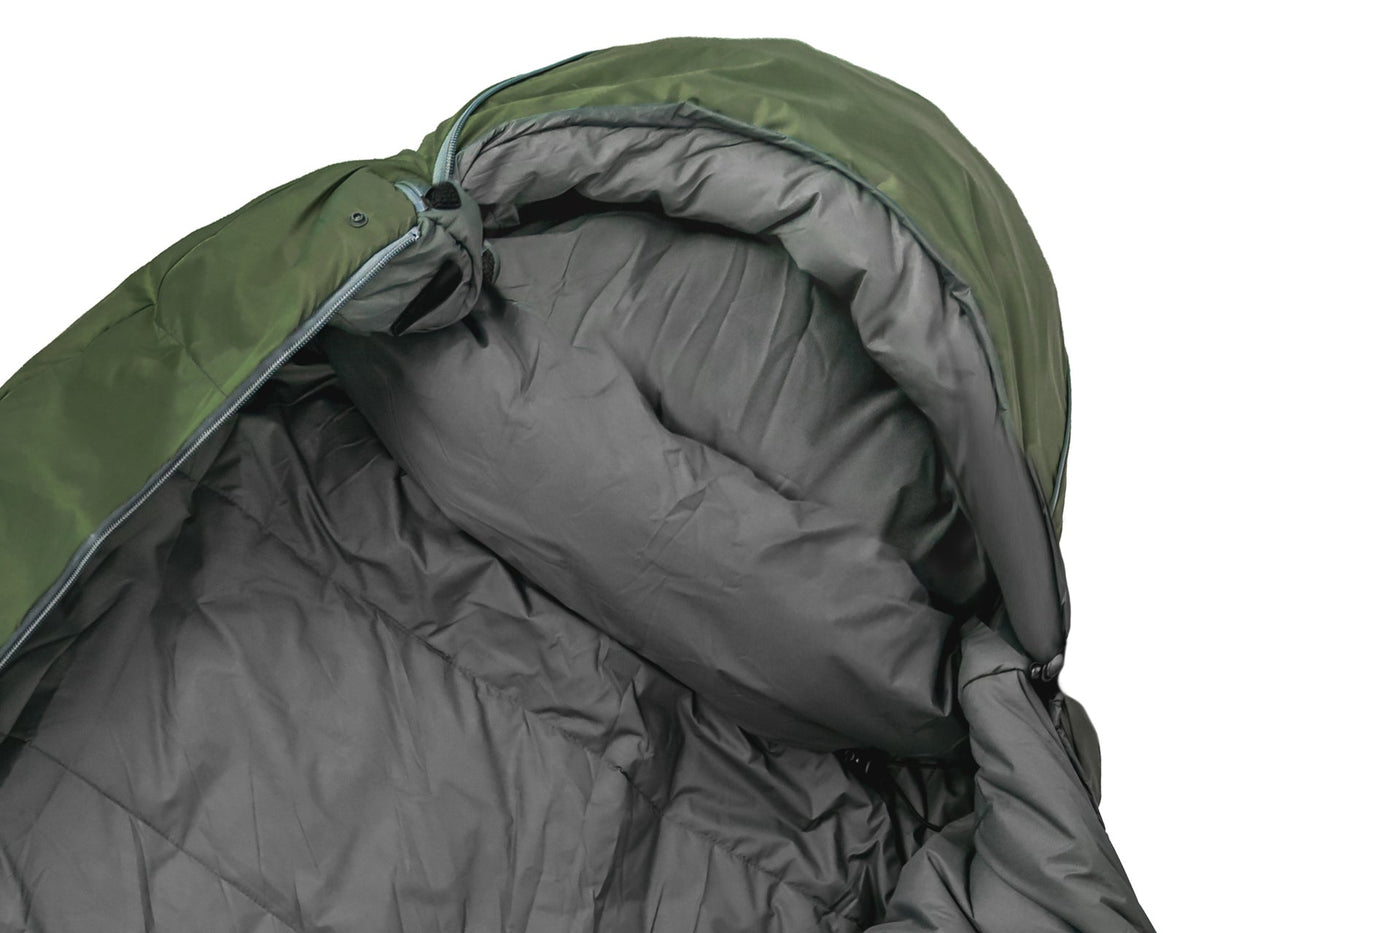 Grüezi bag Wollschlafsack Biopod Wolle Survival - Wärmekragen